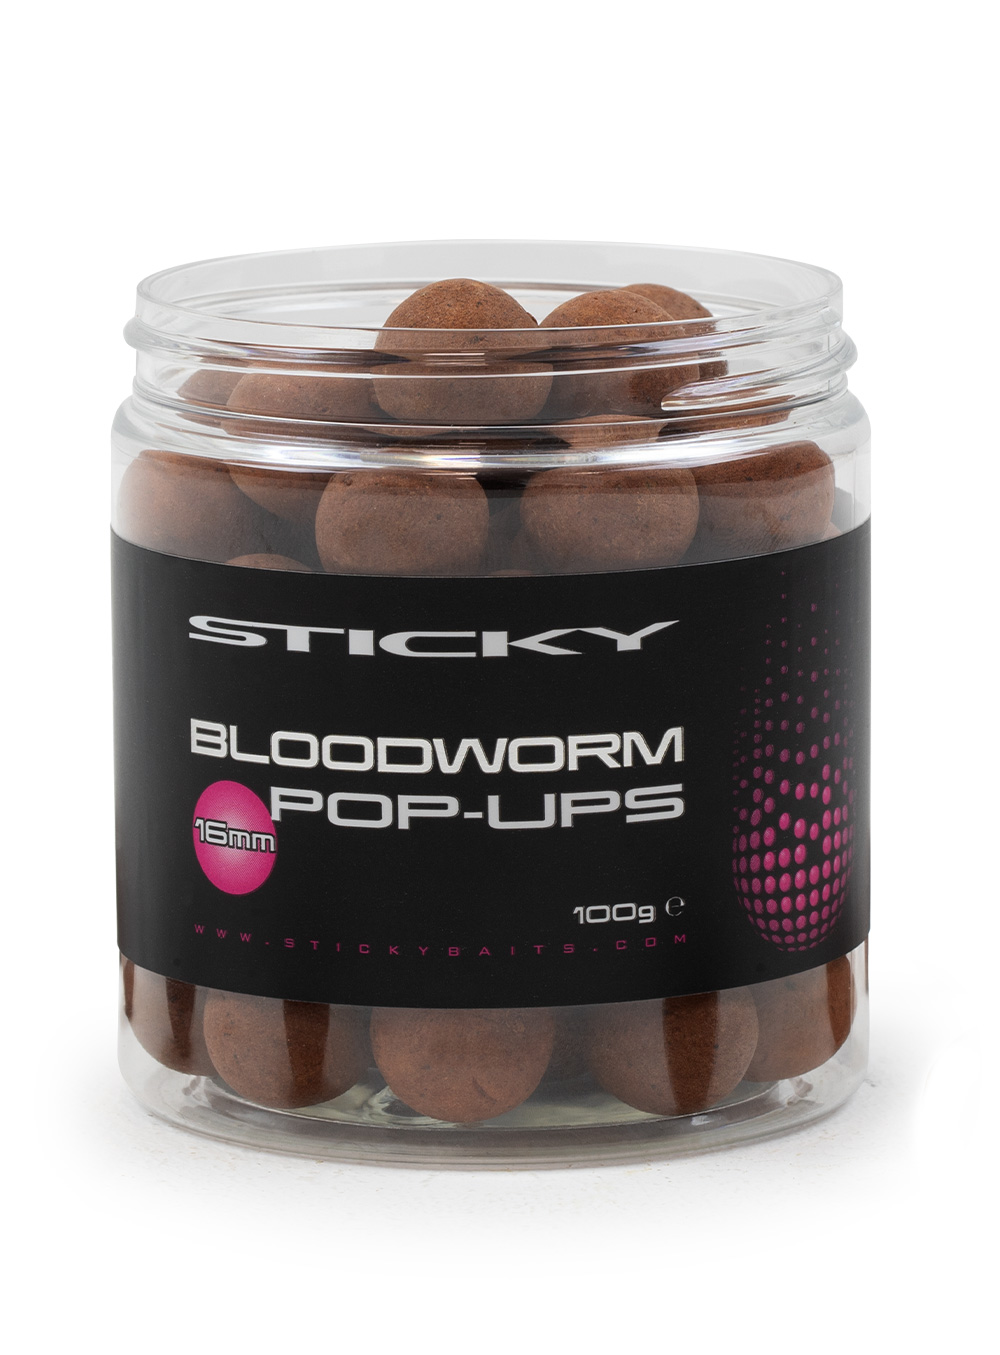 Sticky Baits Bloodworm Pop-Ups 16mm (100g)